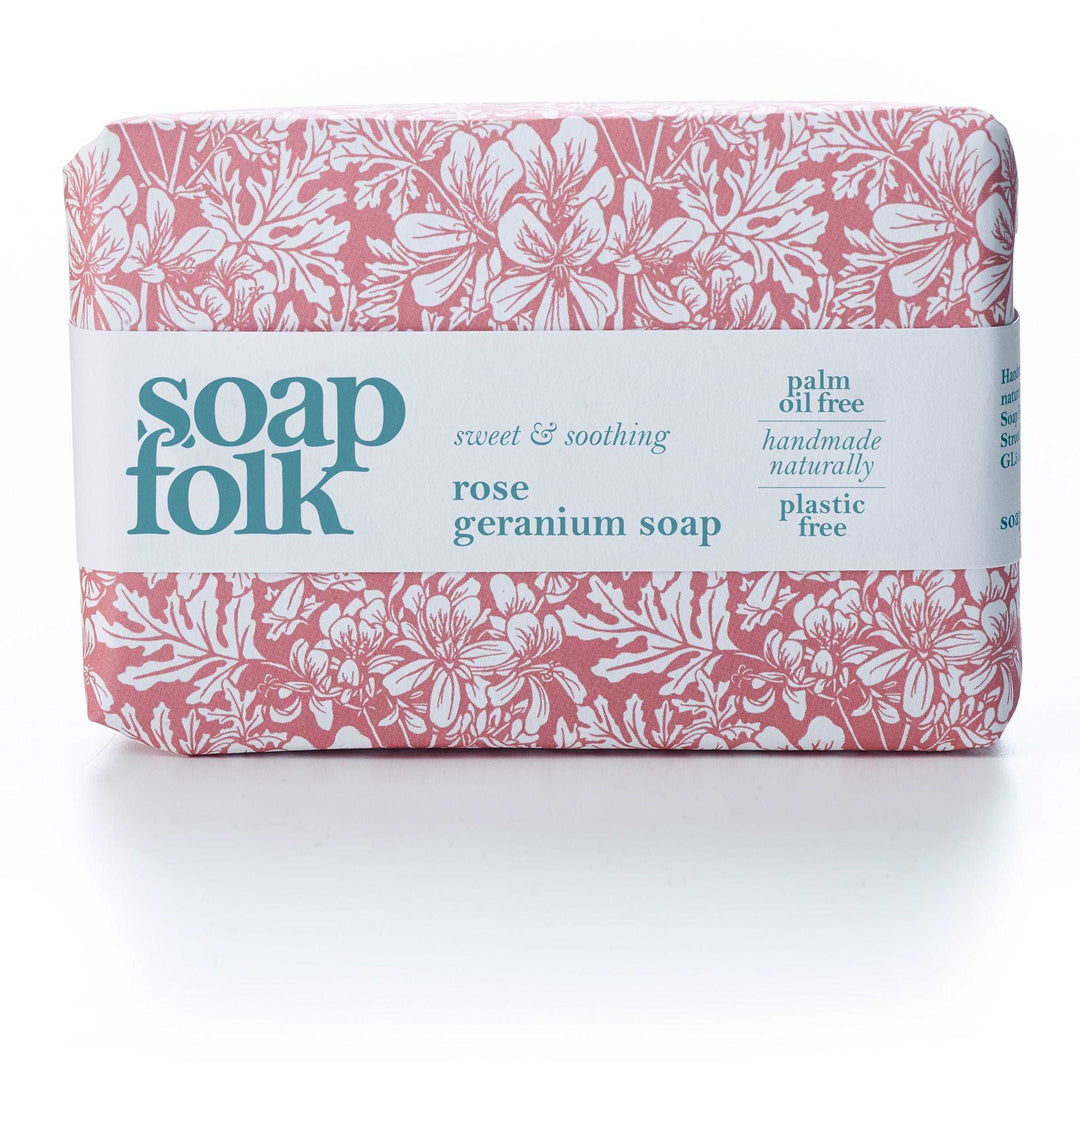 Soap Folk Rose Geranium Soap for sale at Source for the Goose 